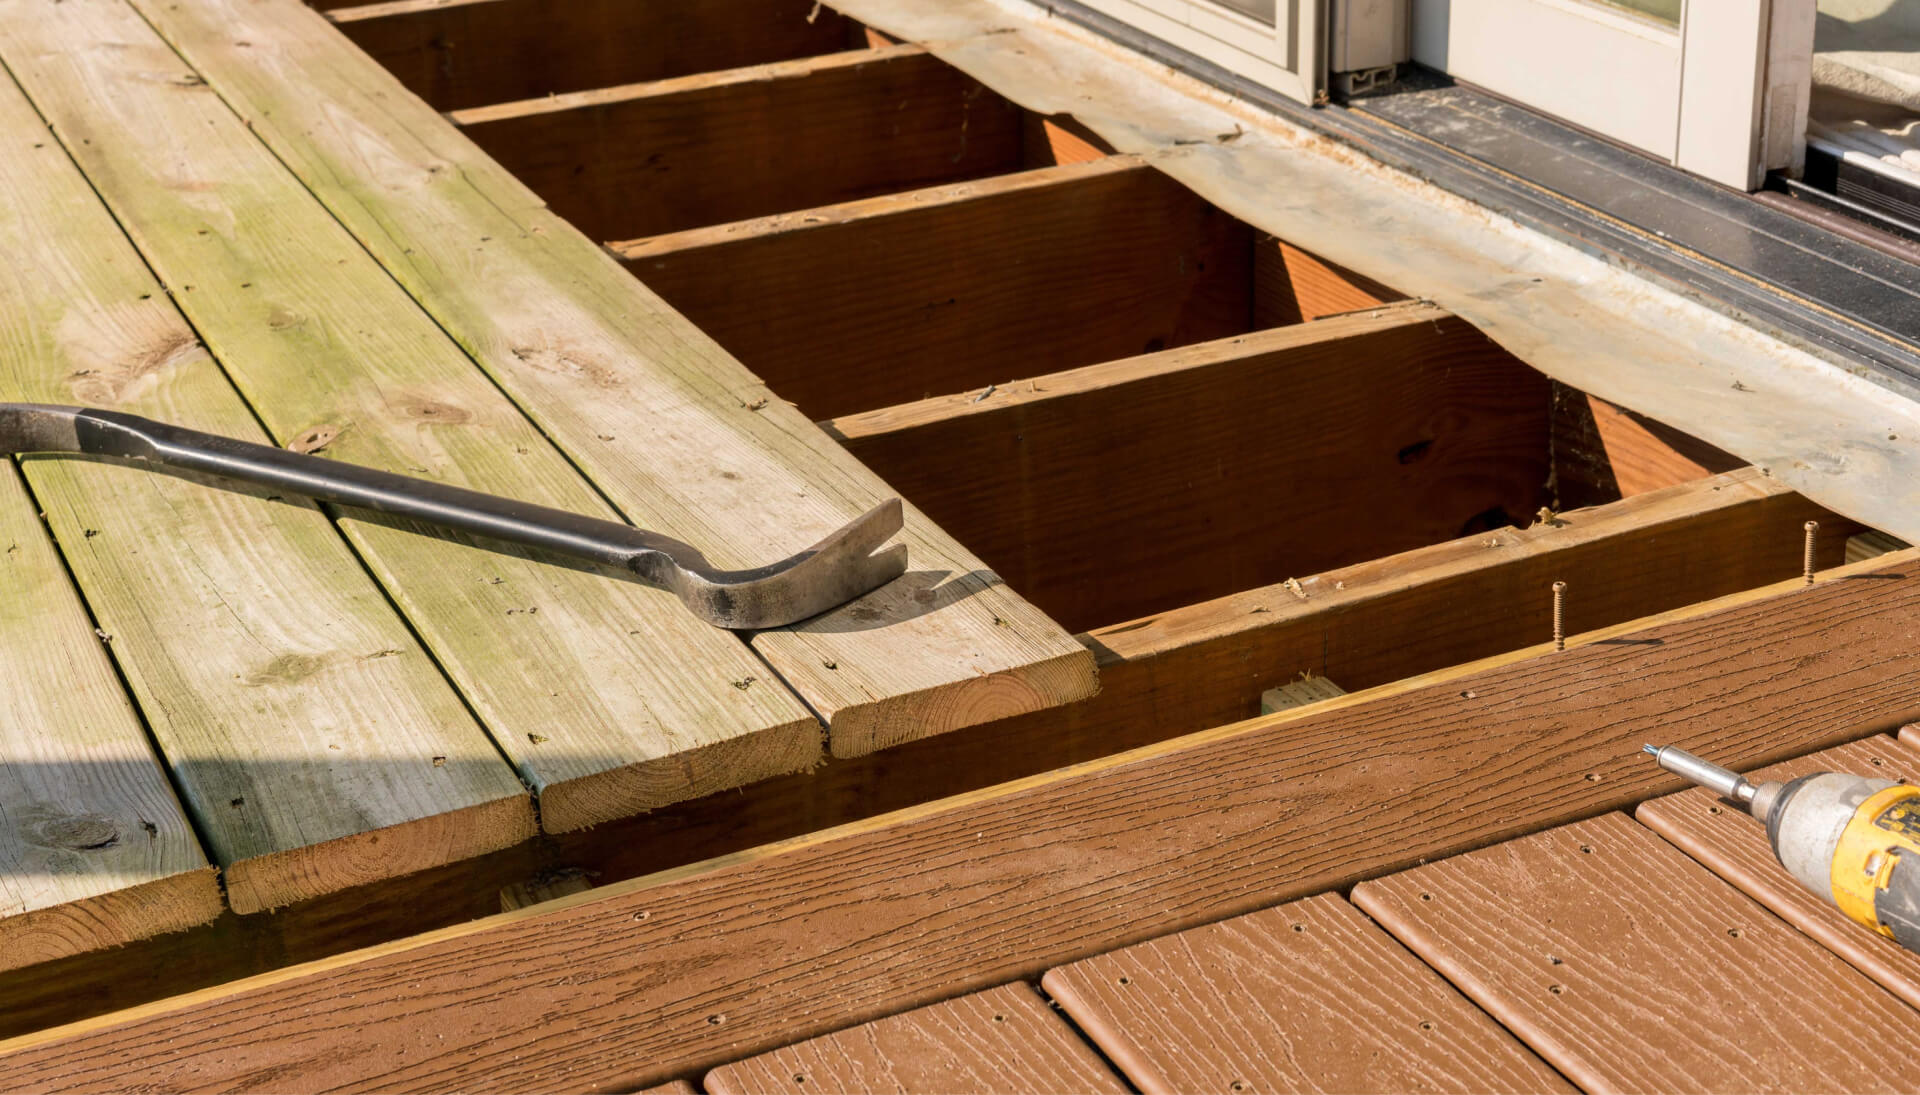 We offer the best deck repair services in Savannah, Georgia